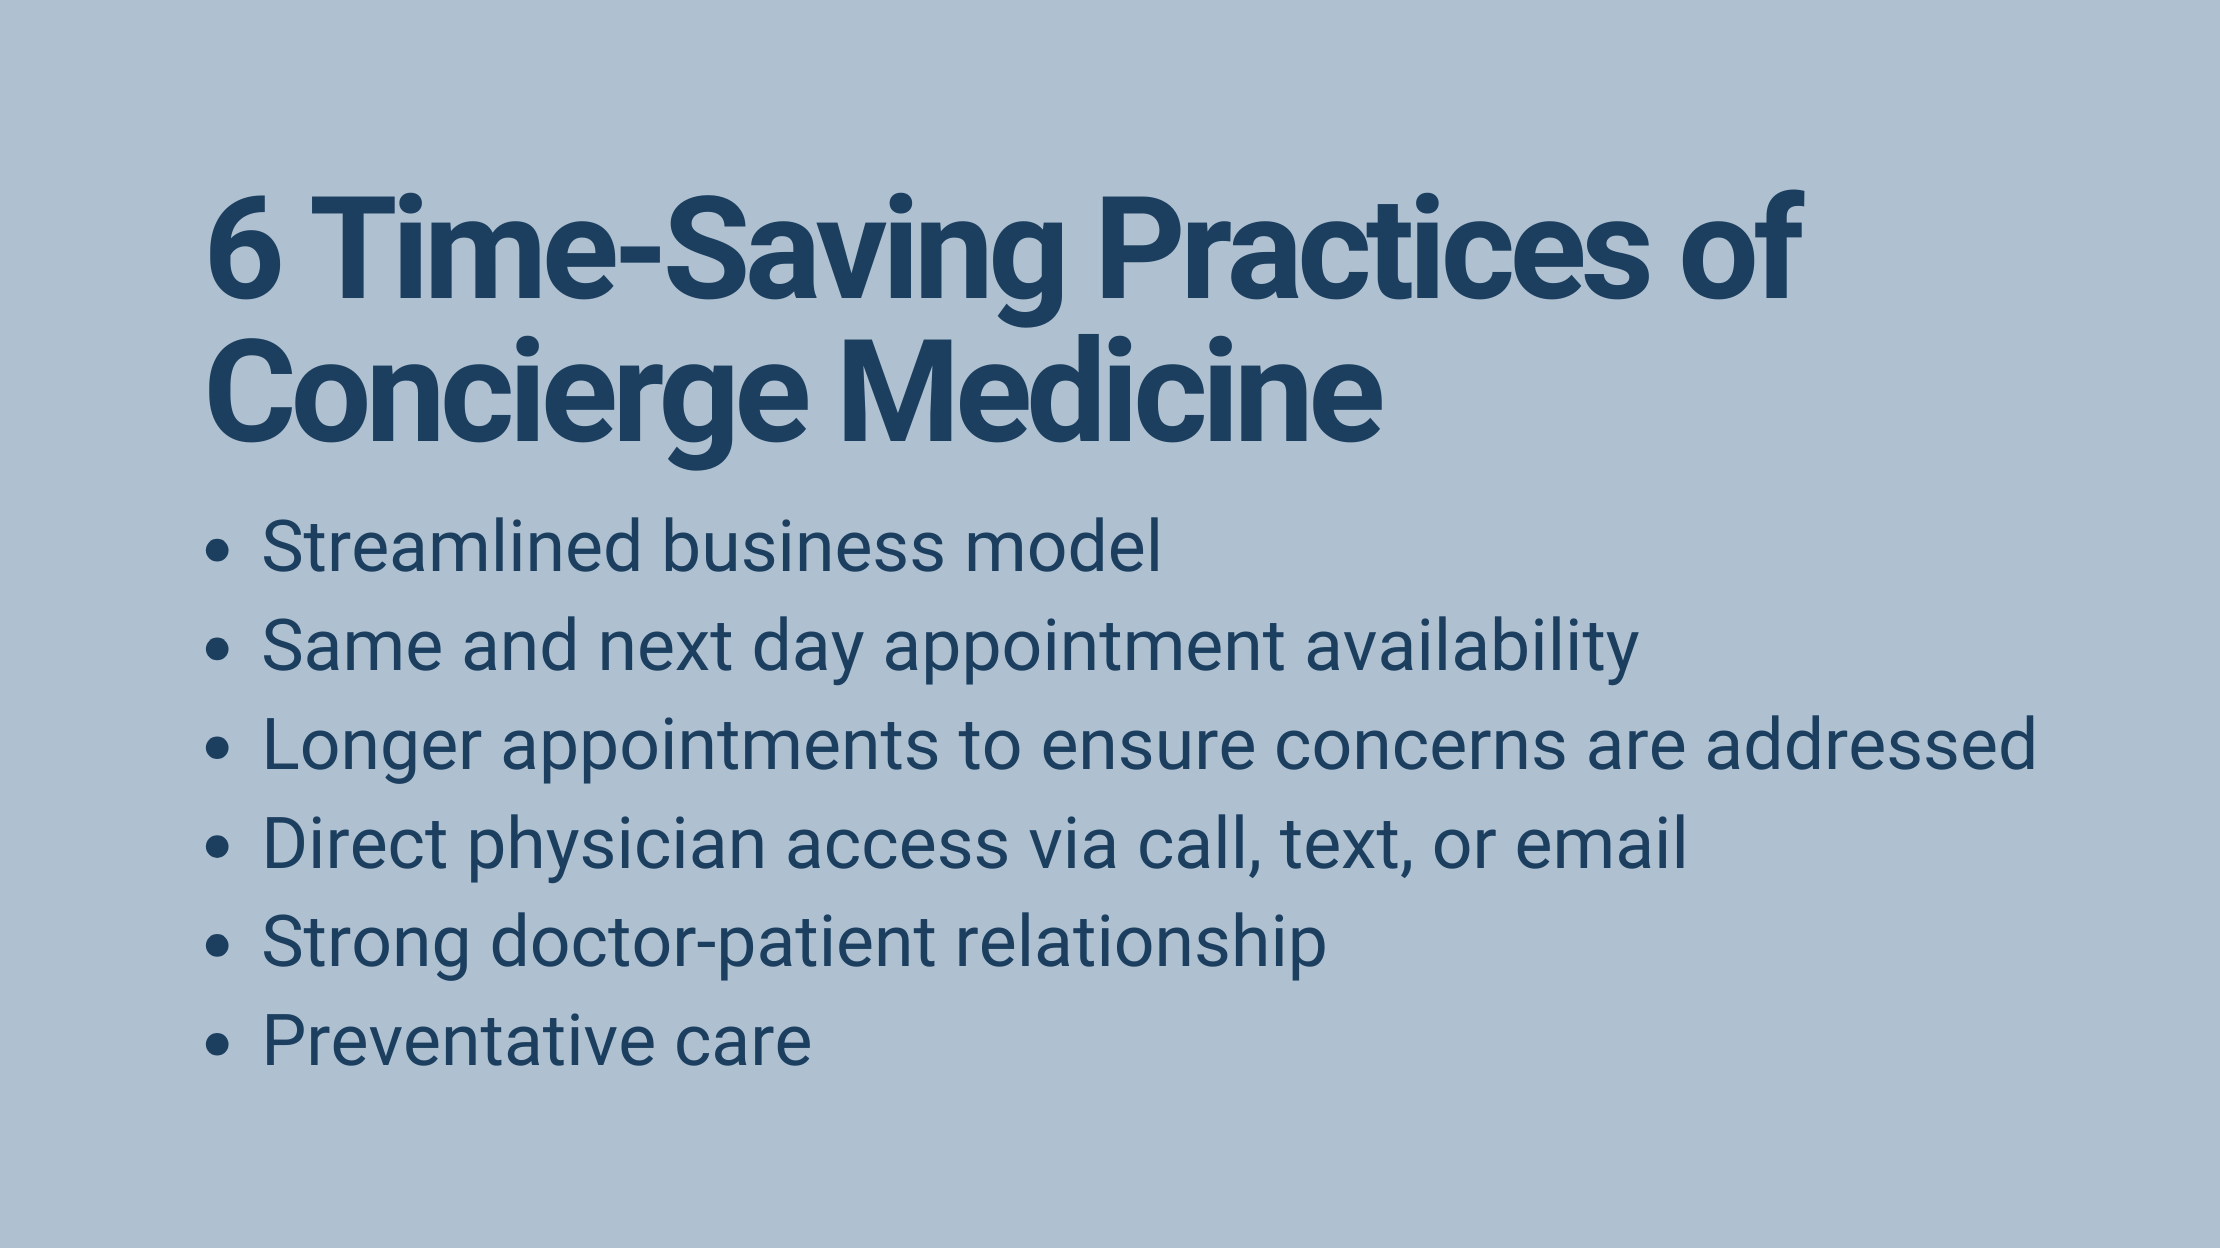 Time-Saving Practices of Concierge Medicine